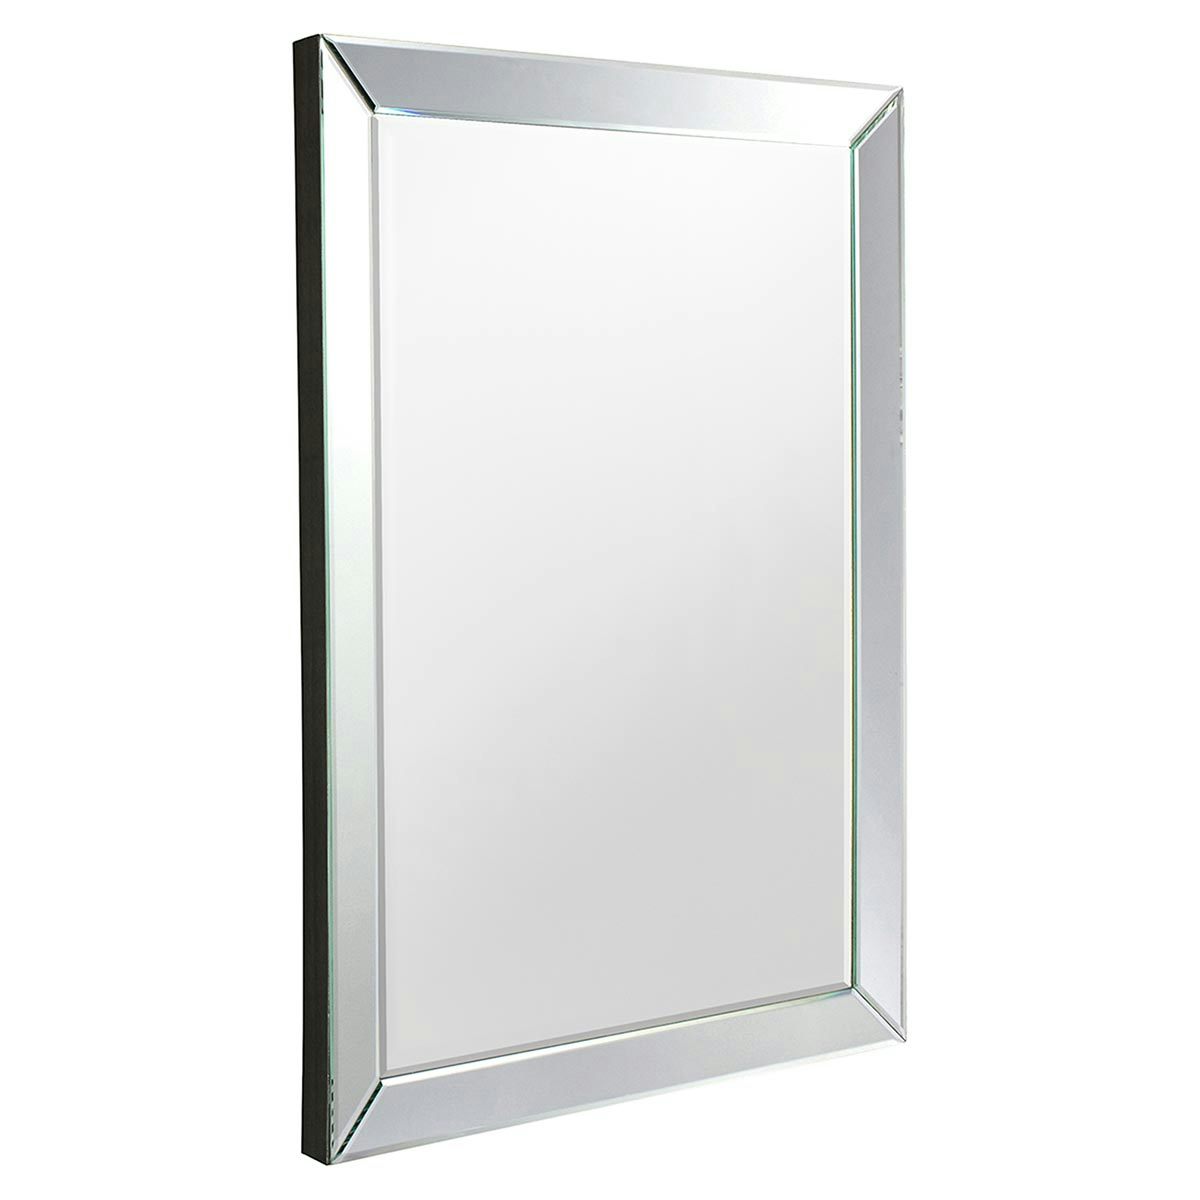 Accents Luna bevelled silver mirror 915 x 610mm